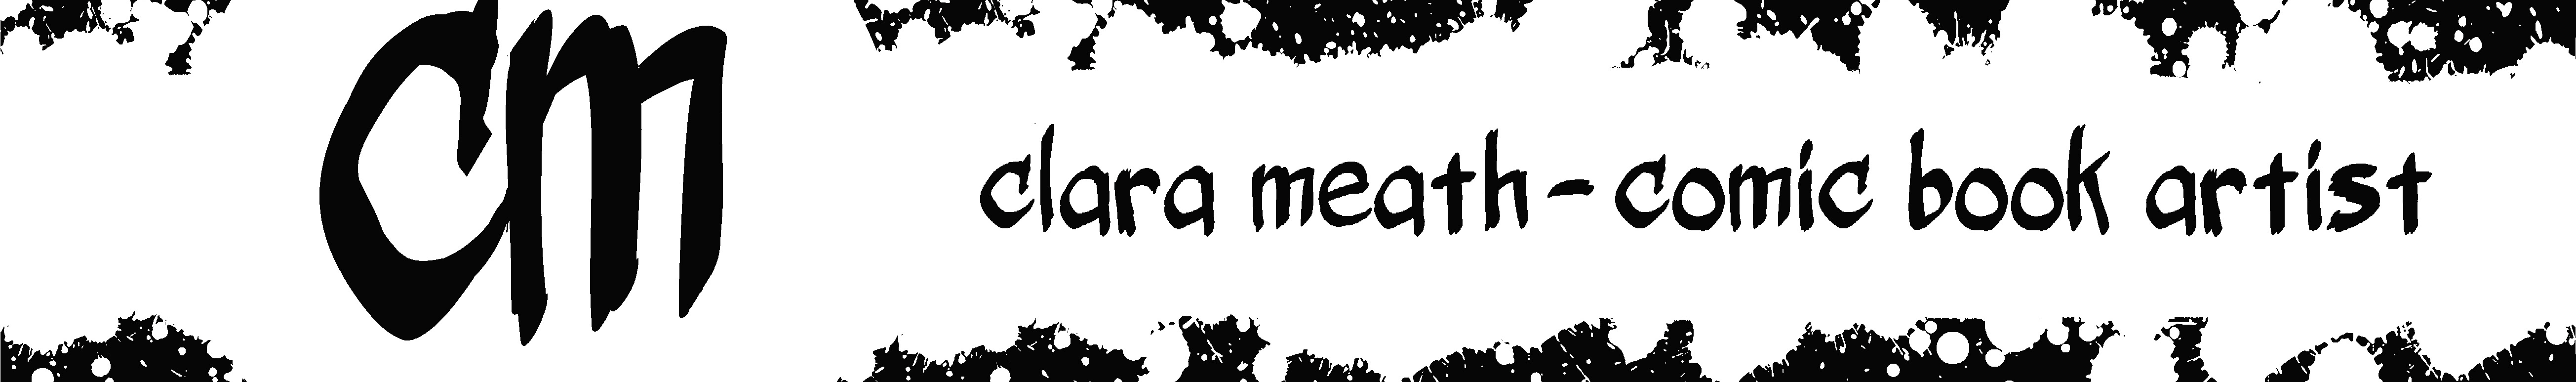 Clara Meath's profile banner